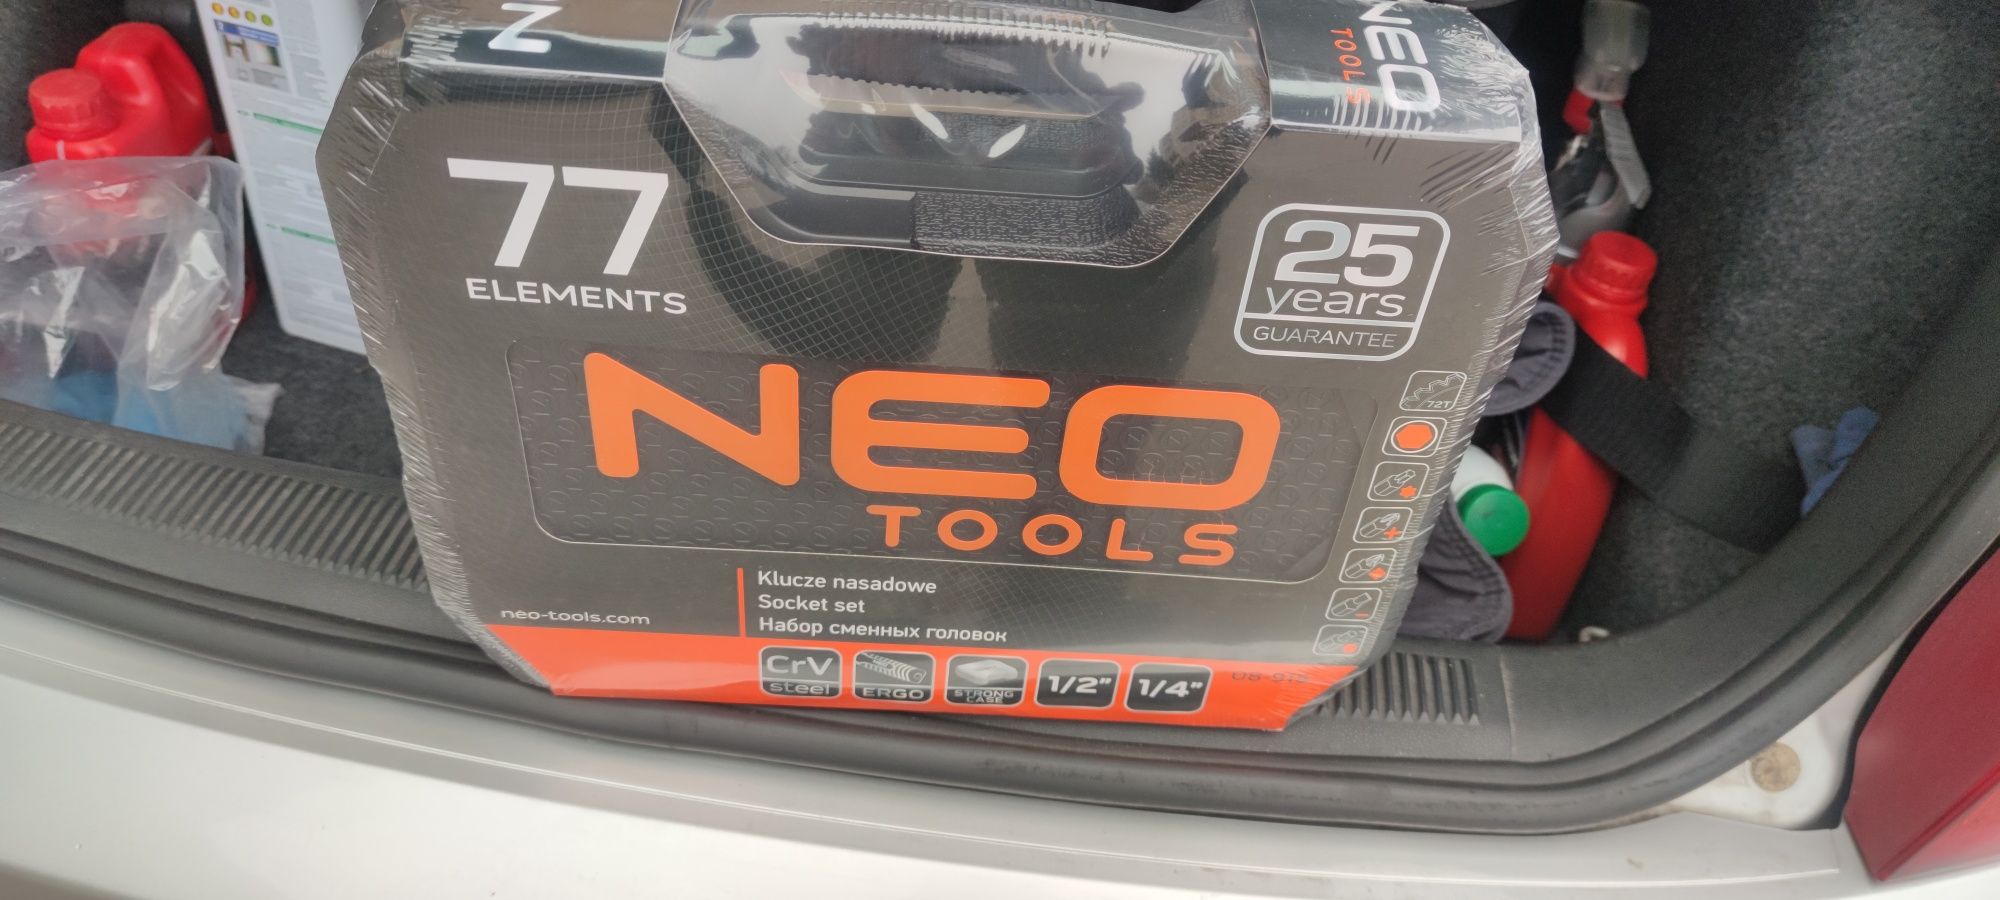 Zestaw kluczy Neo tools 77